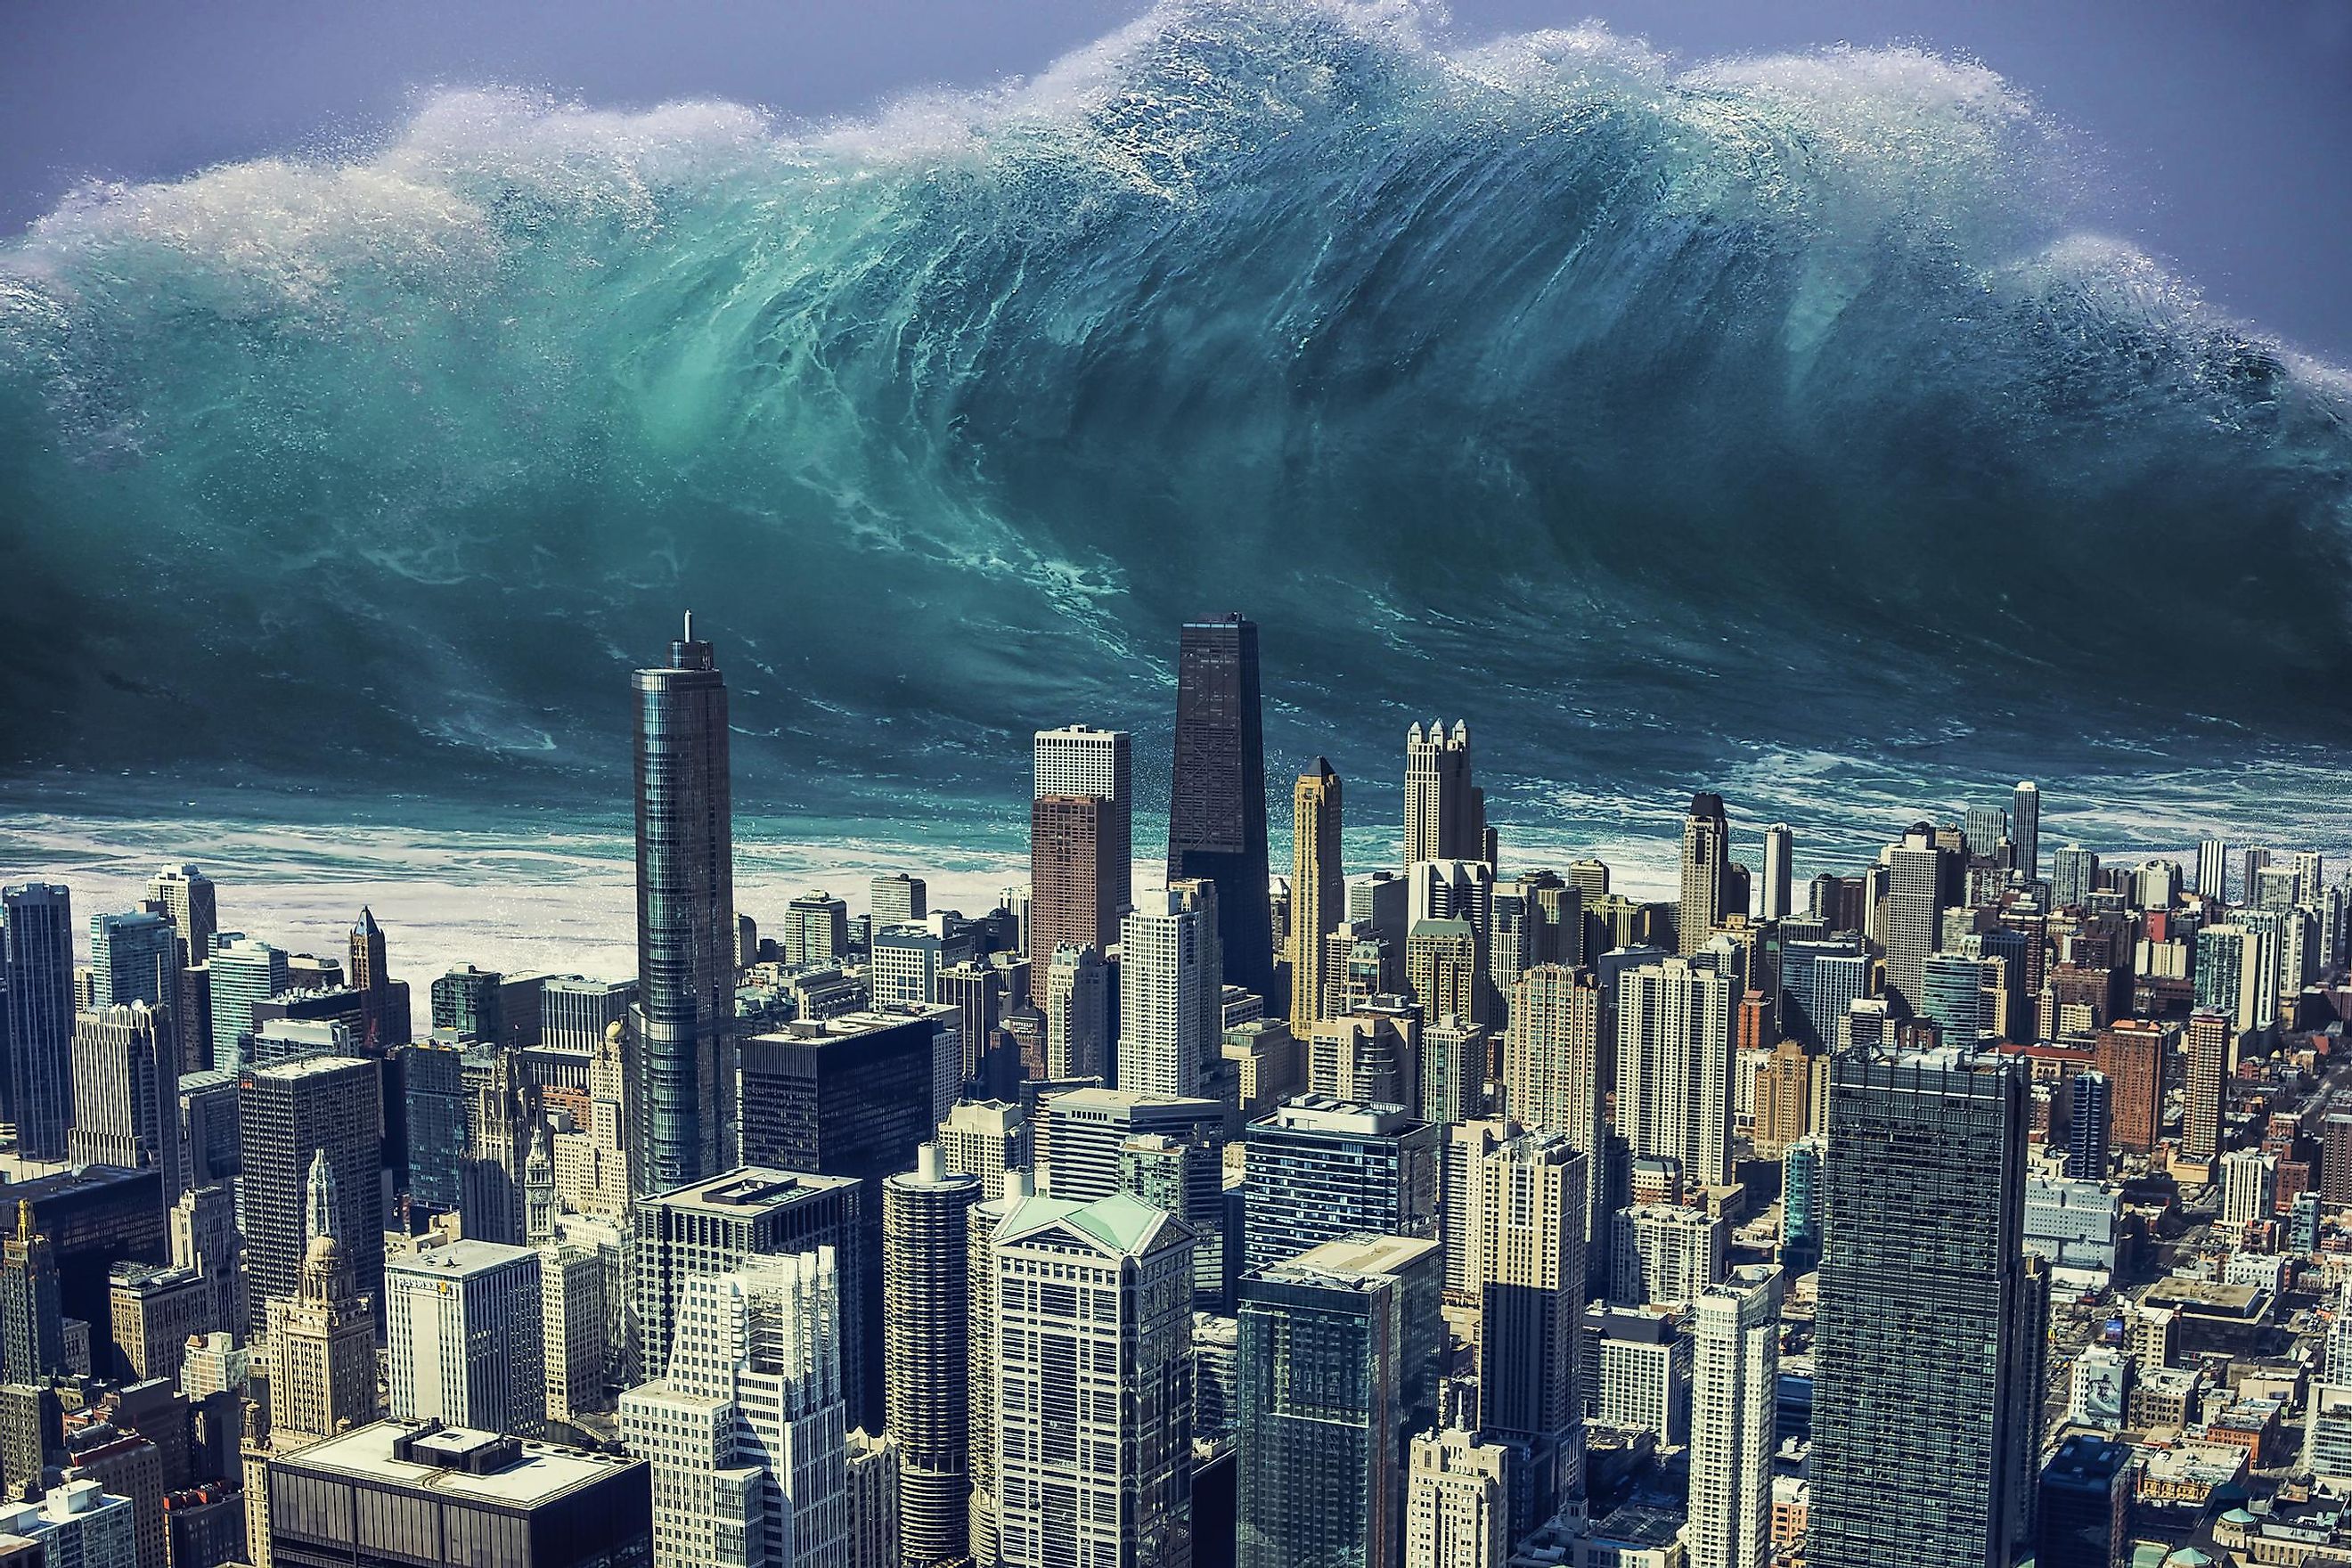 tsunami wave height